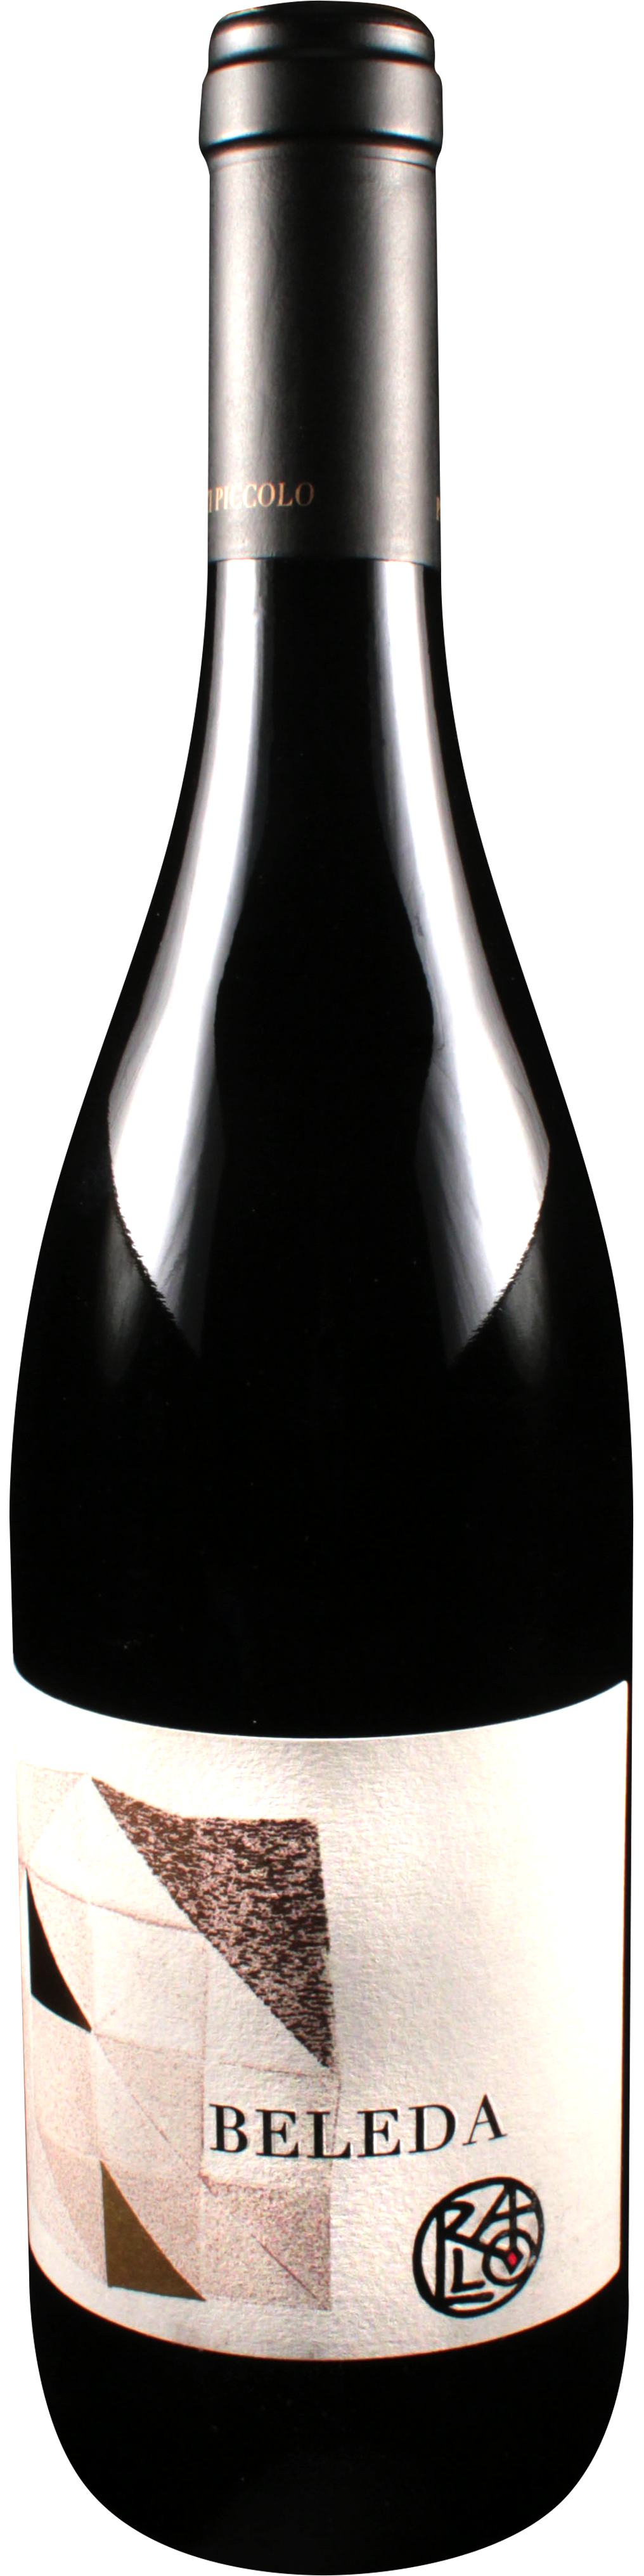 Bottle shot of 2011 Beleda Catarratto